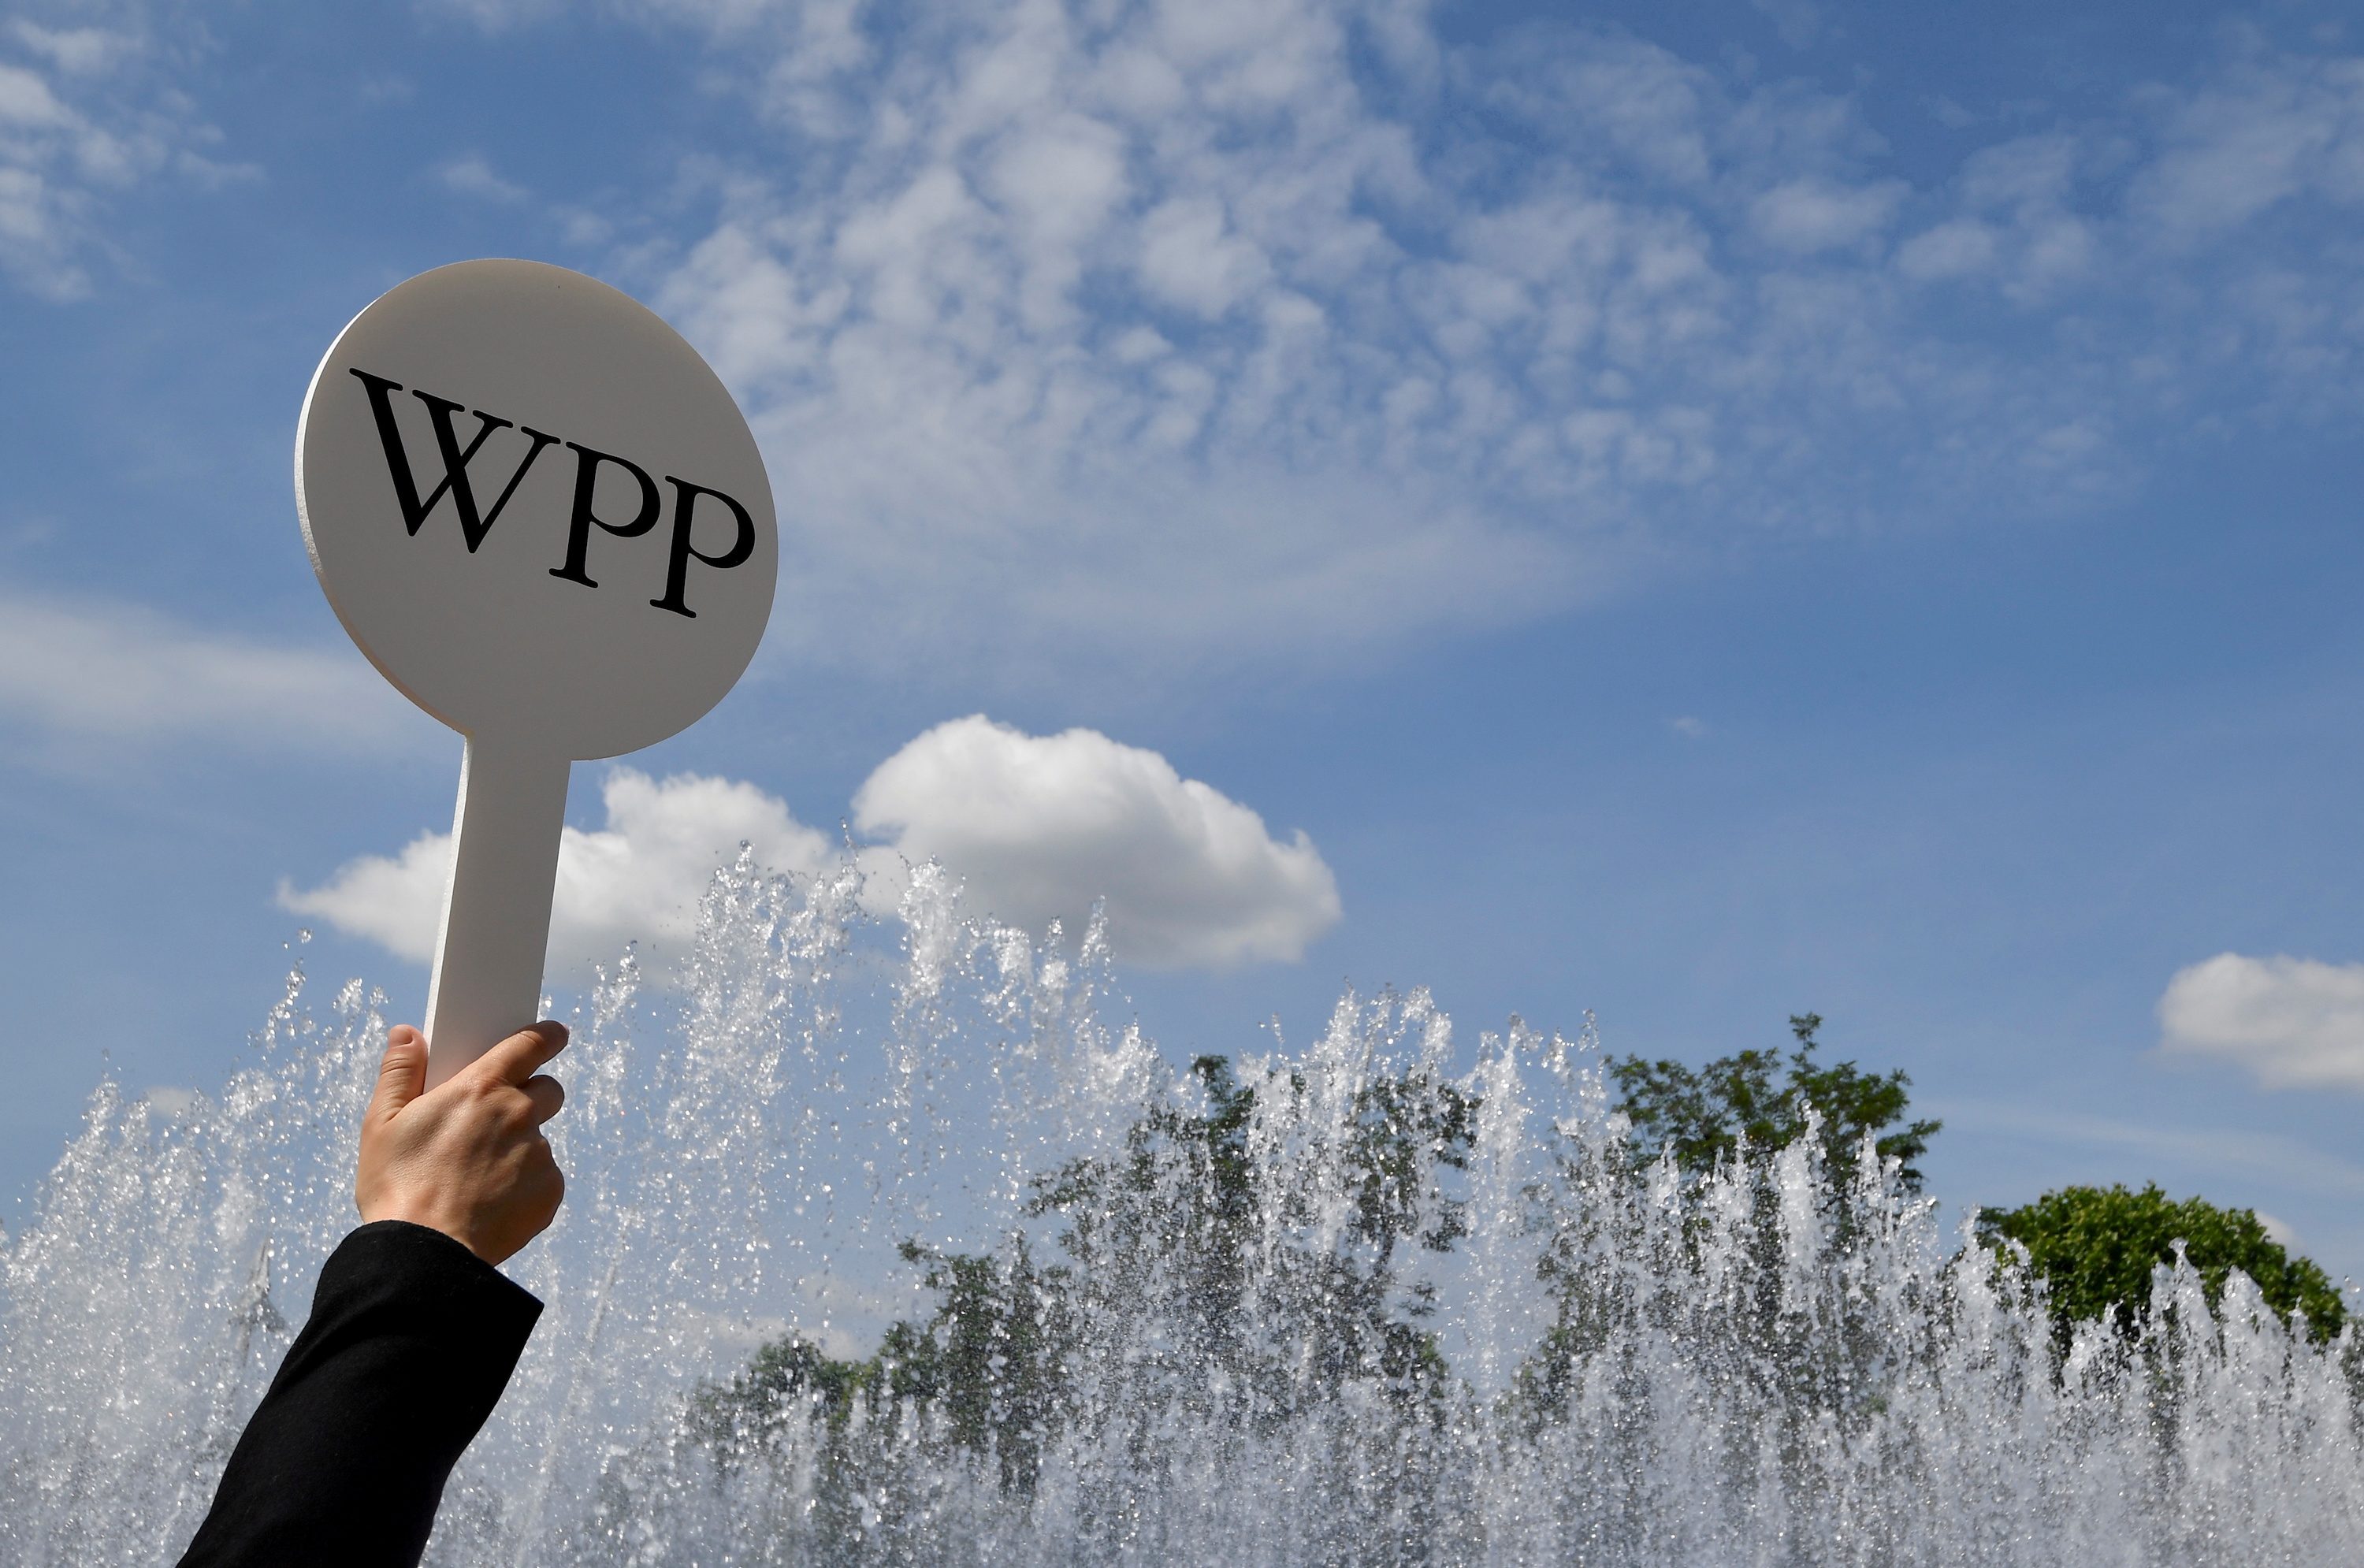 Ad giant WPP pledges net zero emissions by 2025